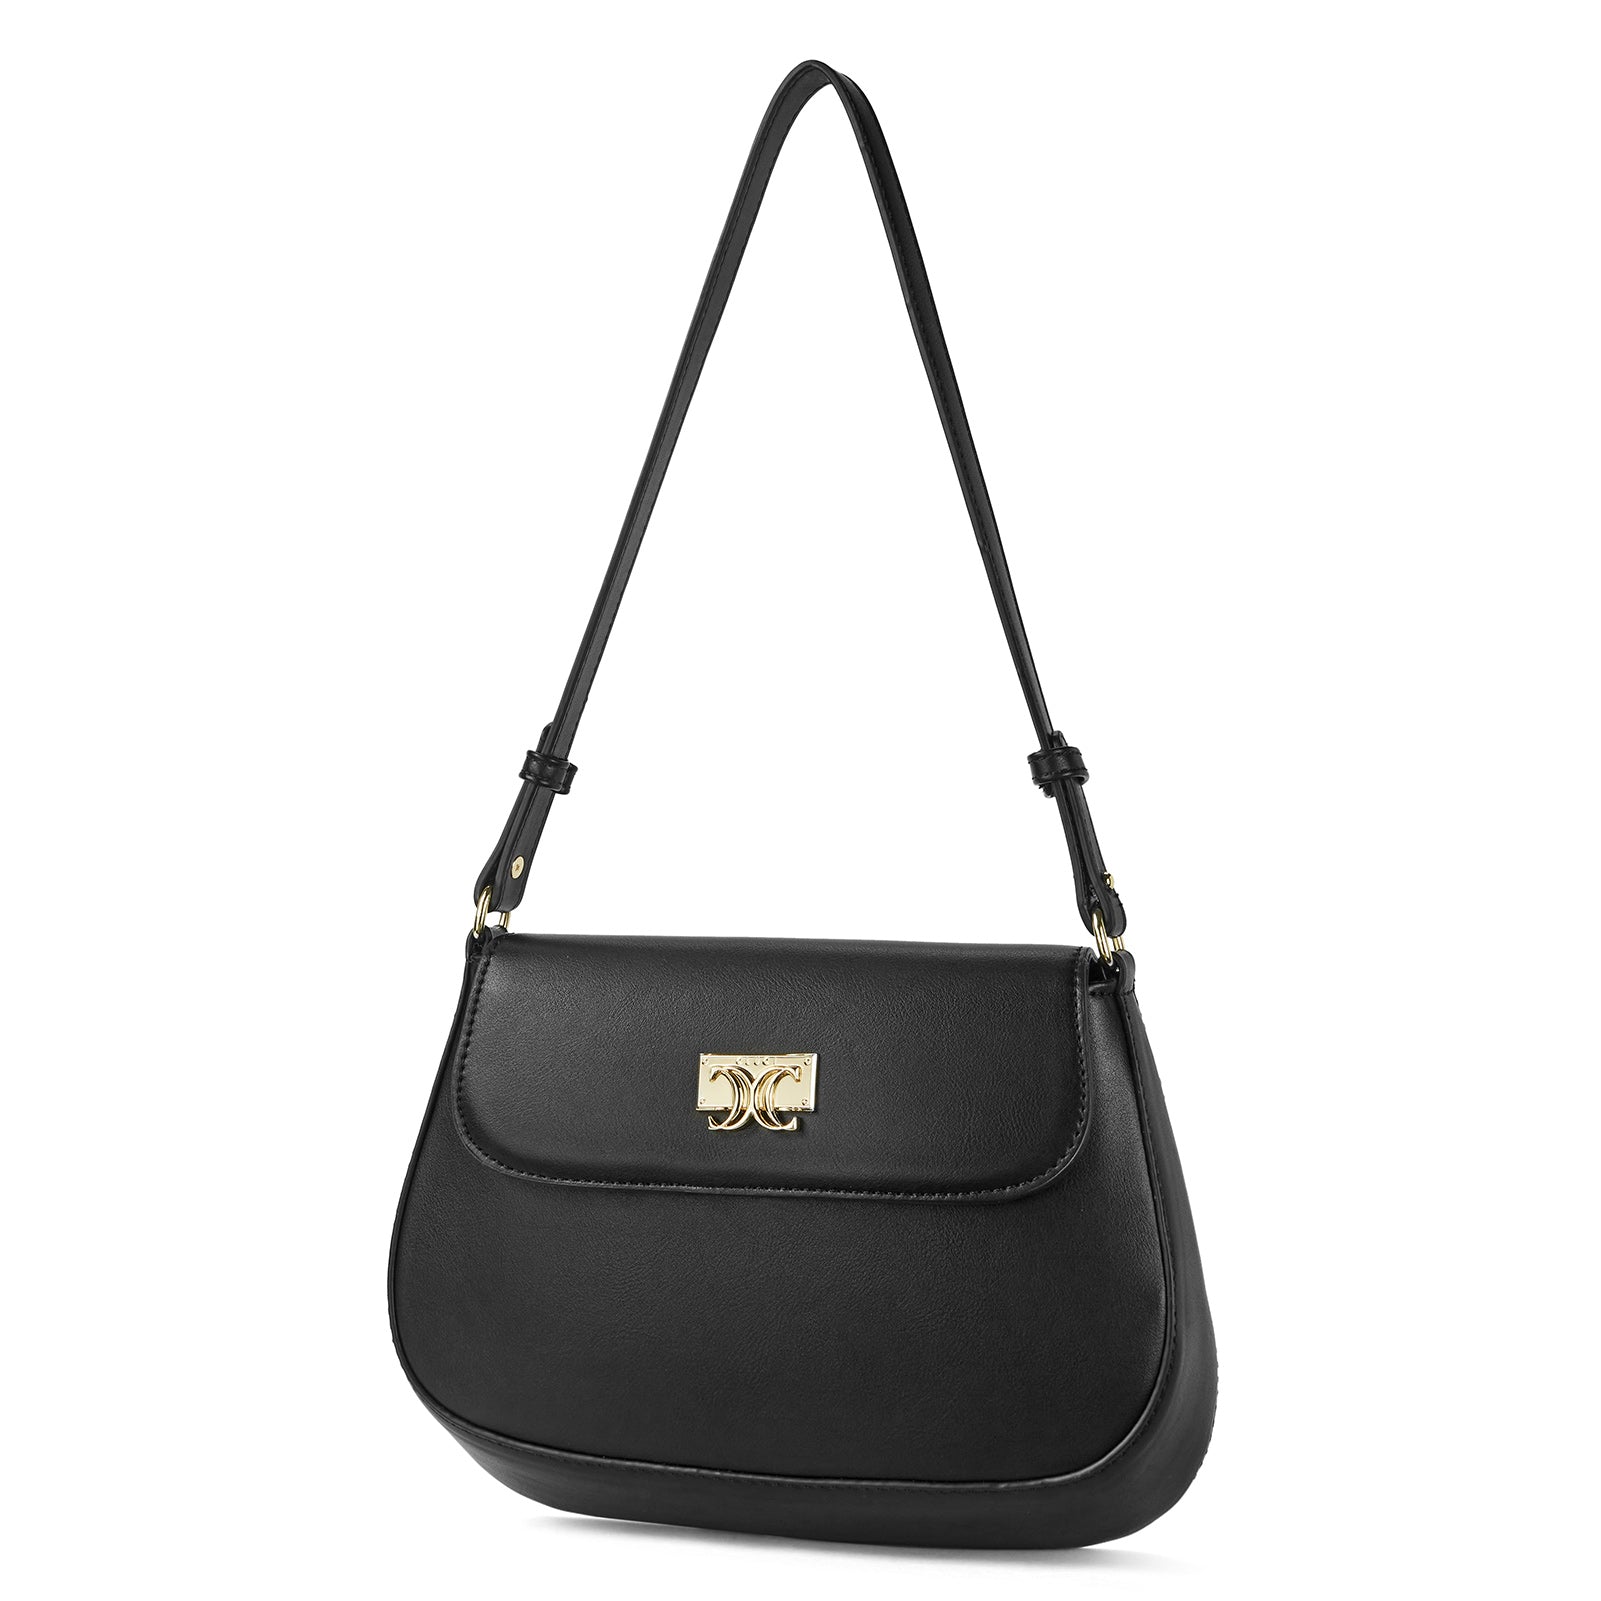 Voera Mini bags for women- Small black purse- Black handbag -Mini purse:  Handbags: Amazon.com